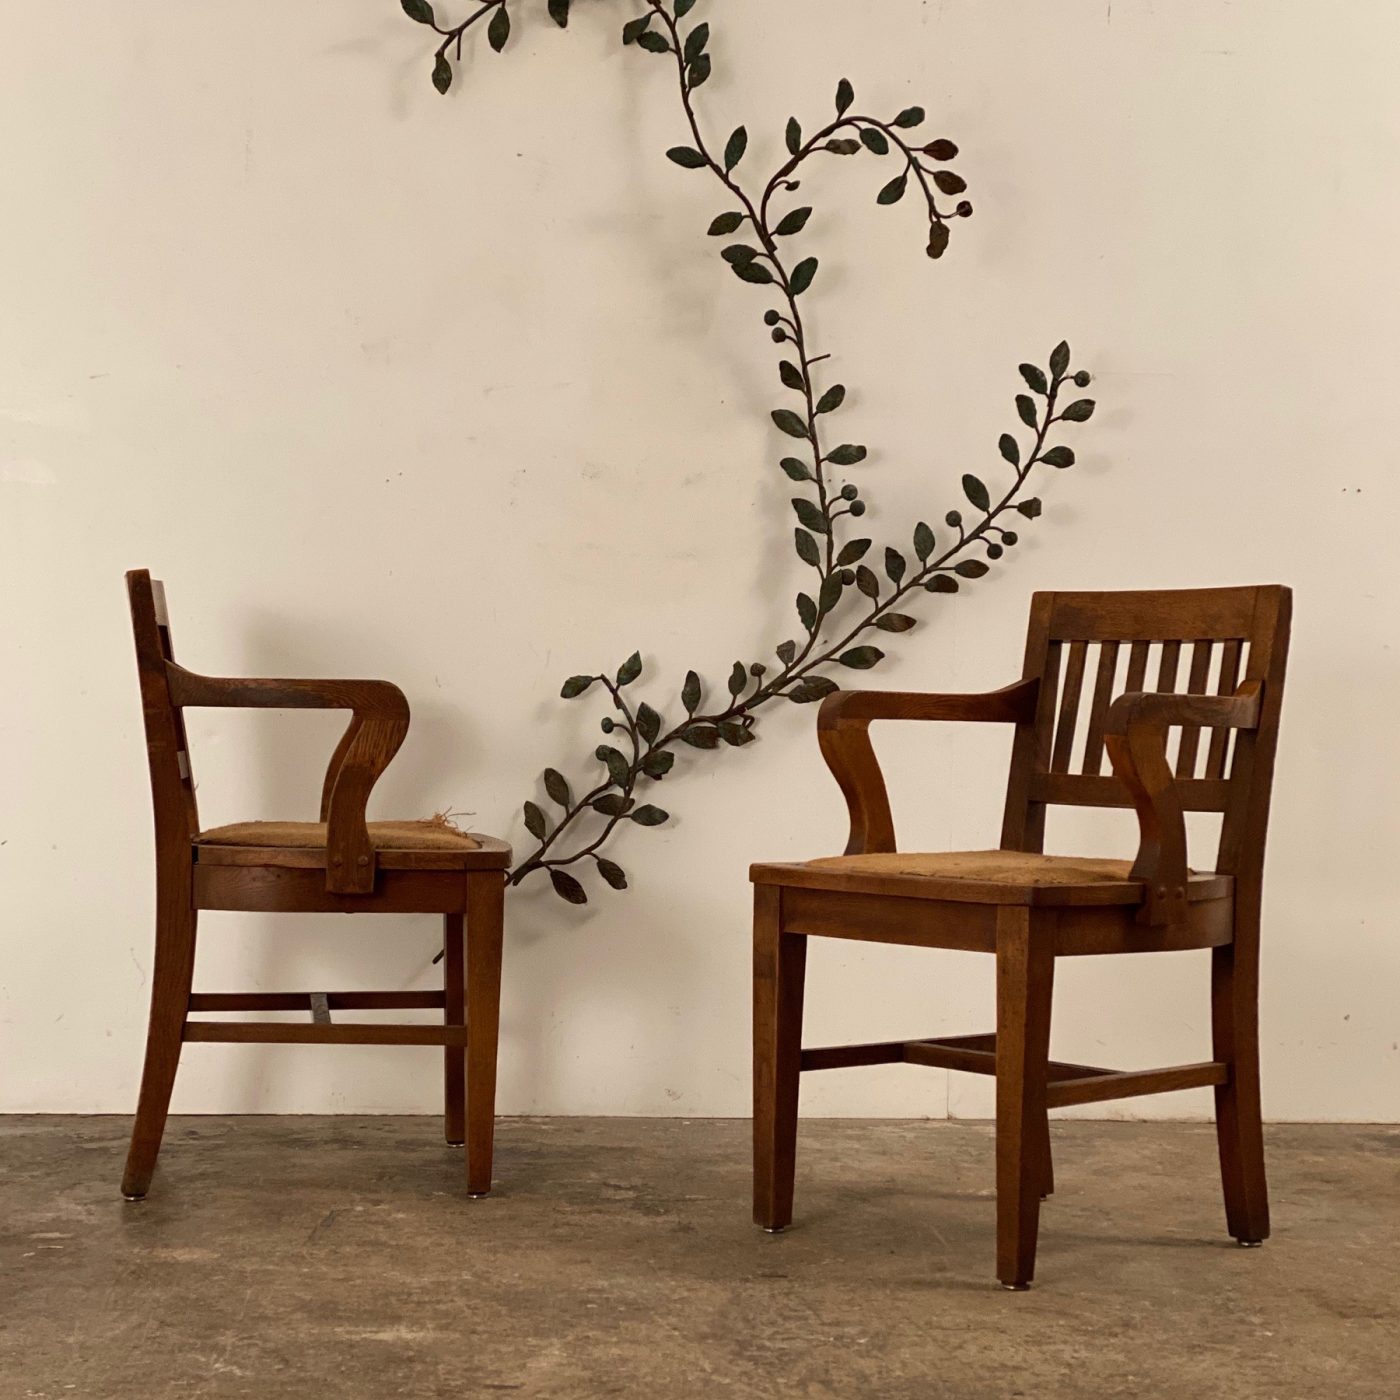 objet-vagabond-oak-chairs0002